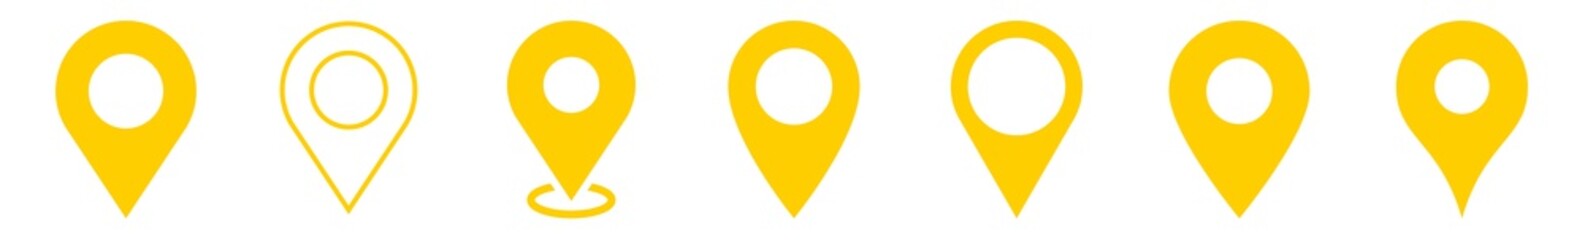 location pin icon yellow | map marker illustration | destination symbol | pointer logo | position si